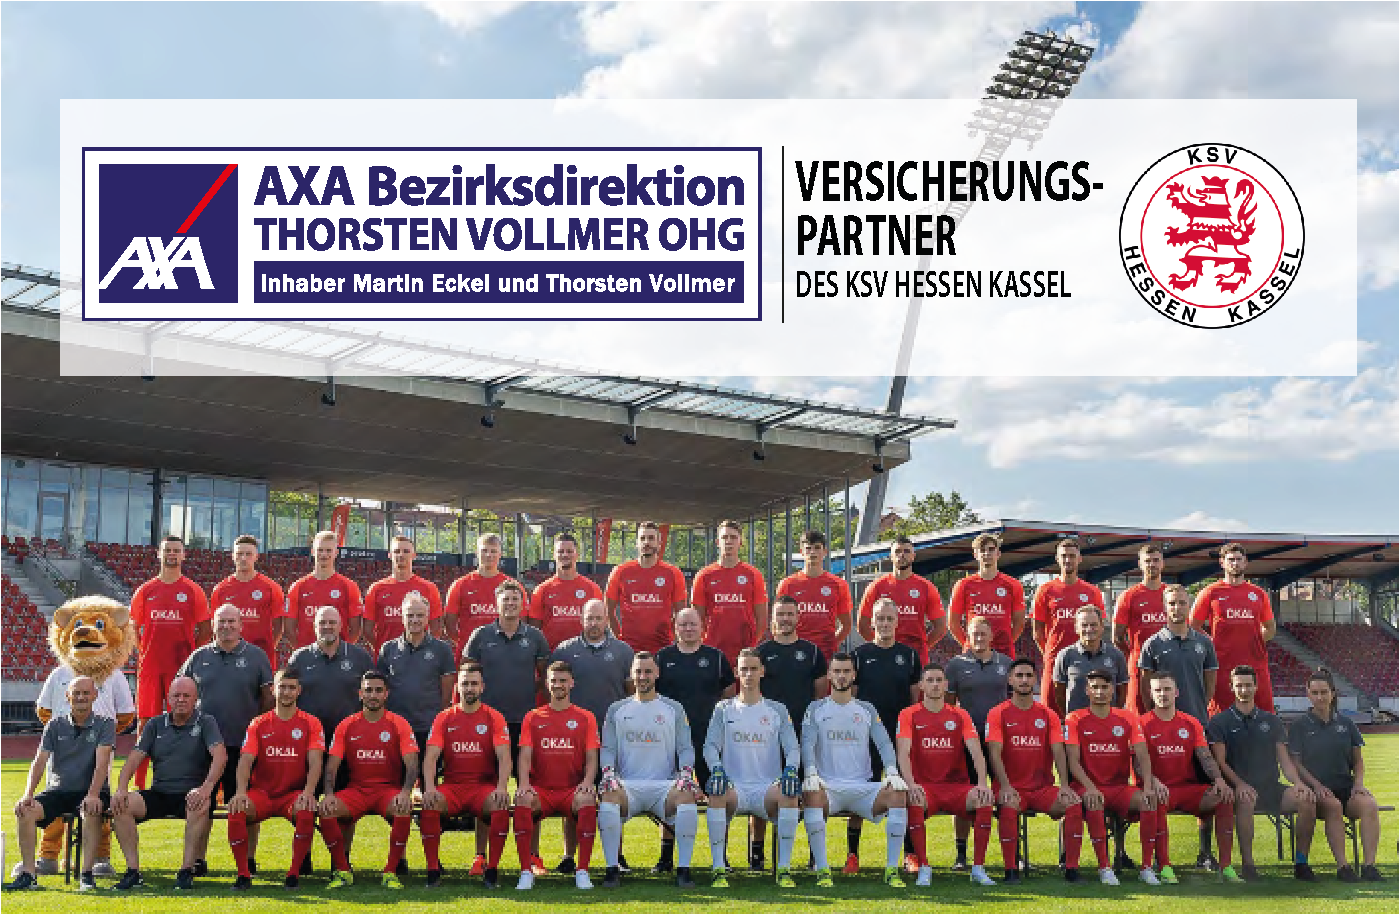 AXA Mönchengladbach Thorsten Vollmer OHG | Sponsoring KSV Hessen Kassel e.V.